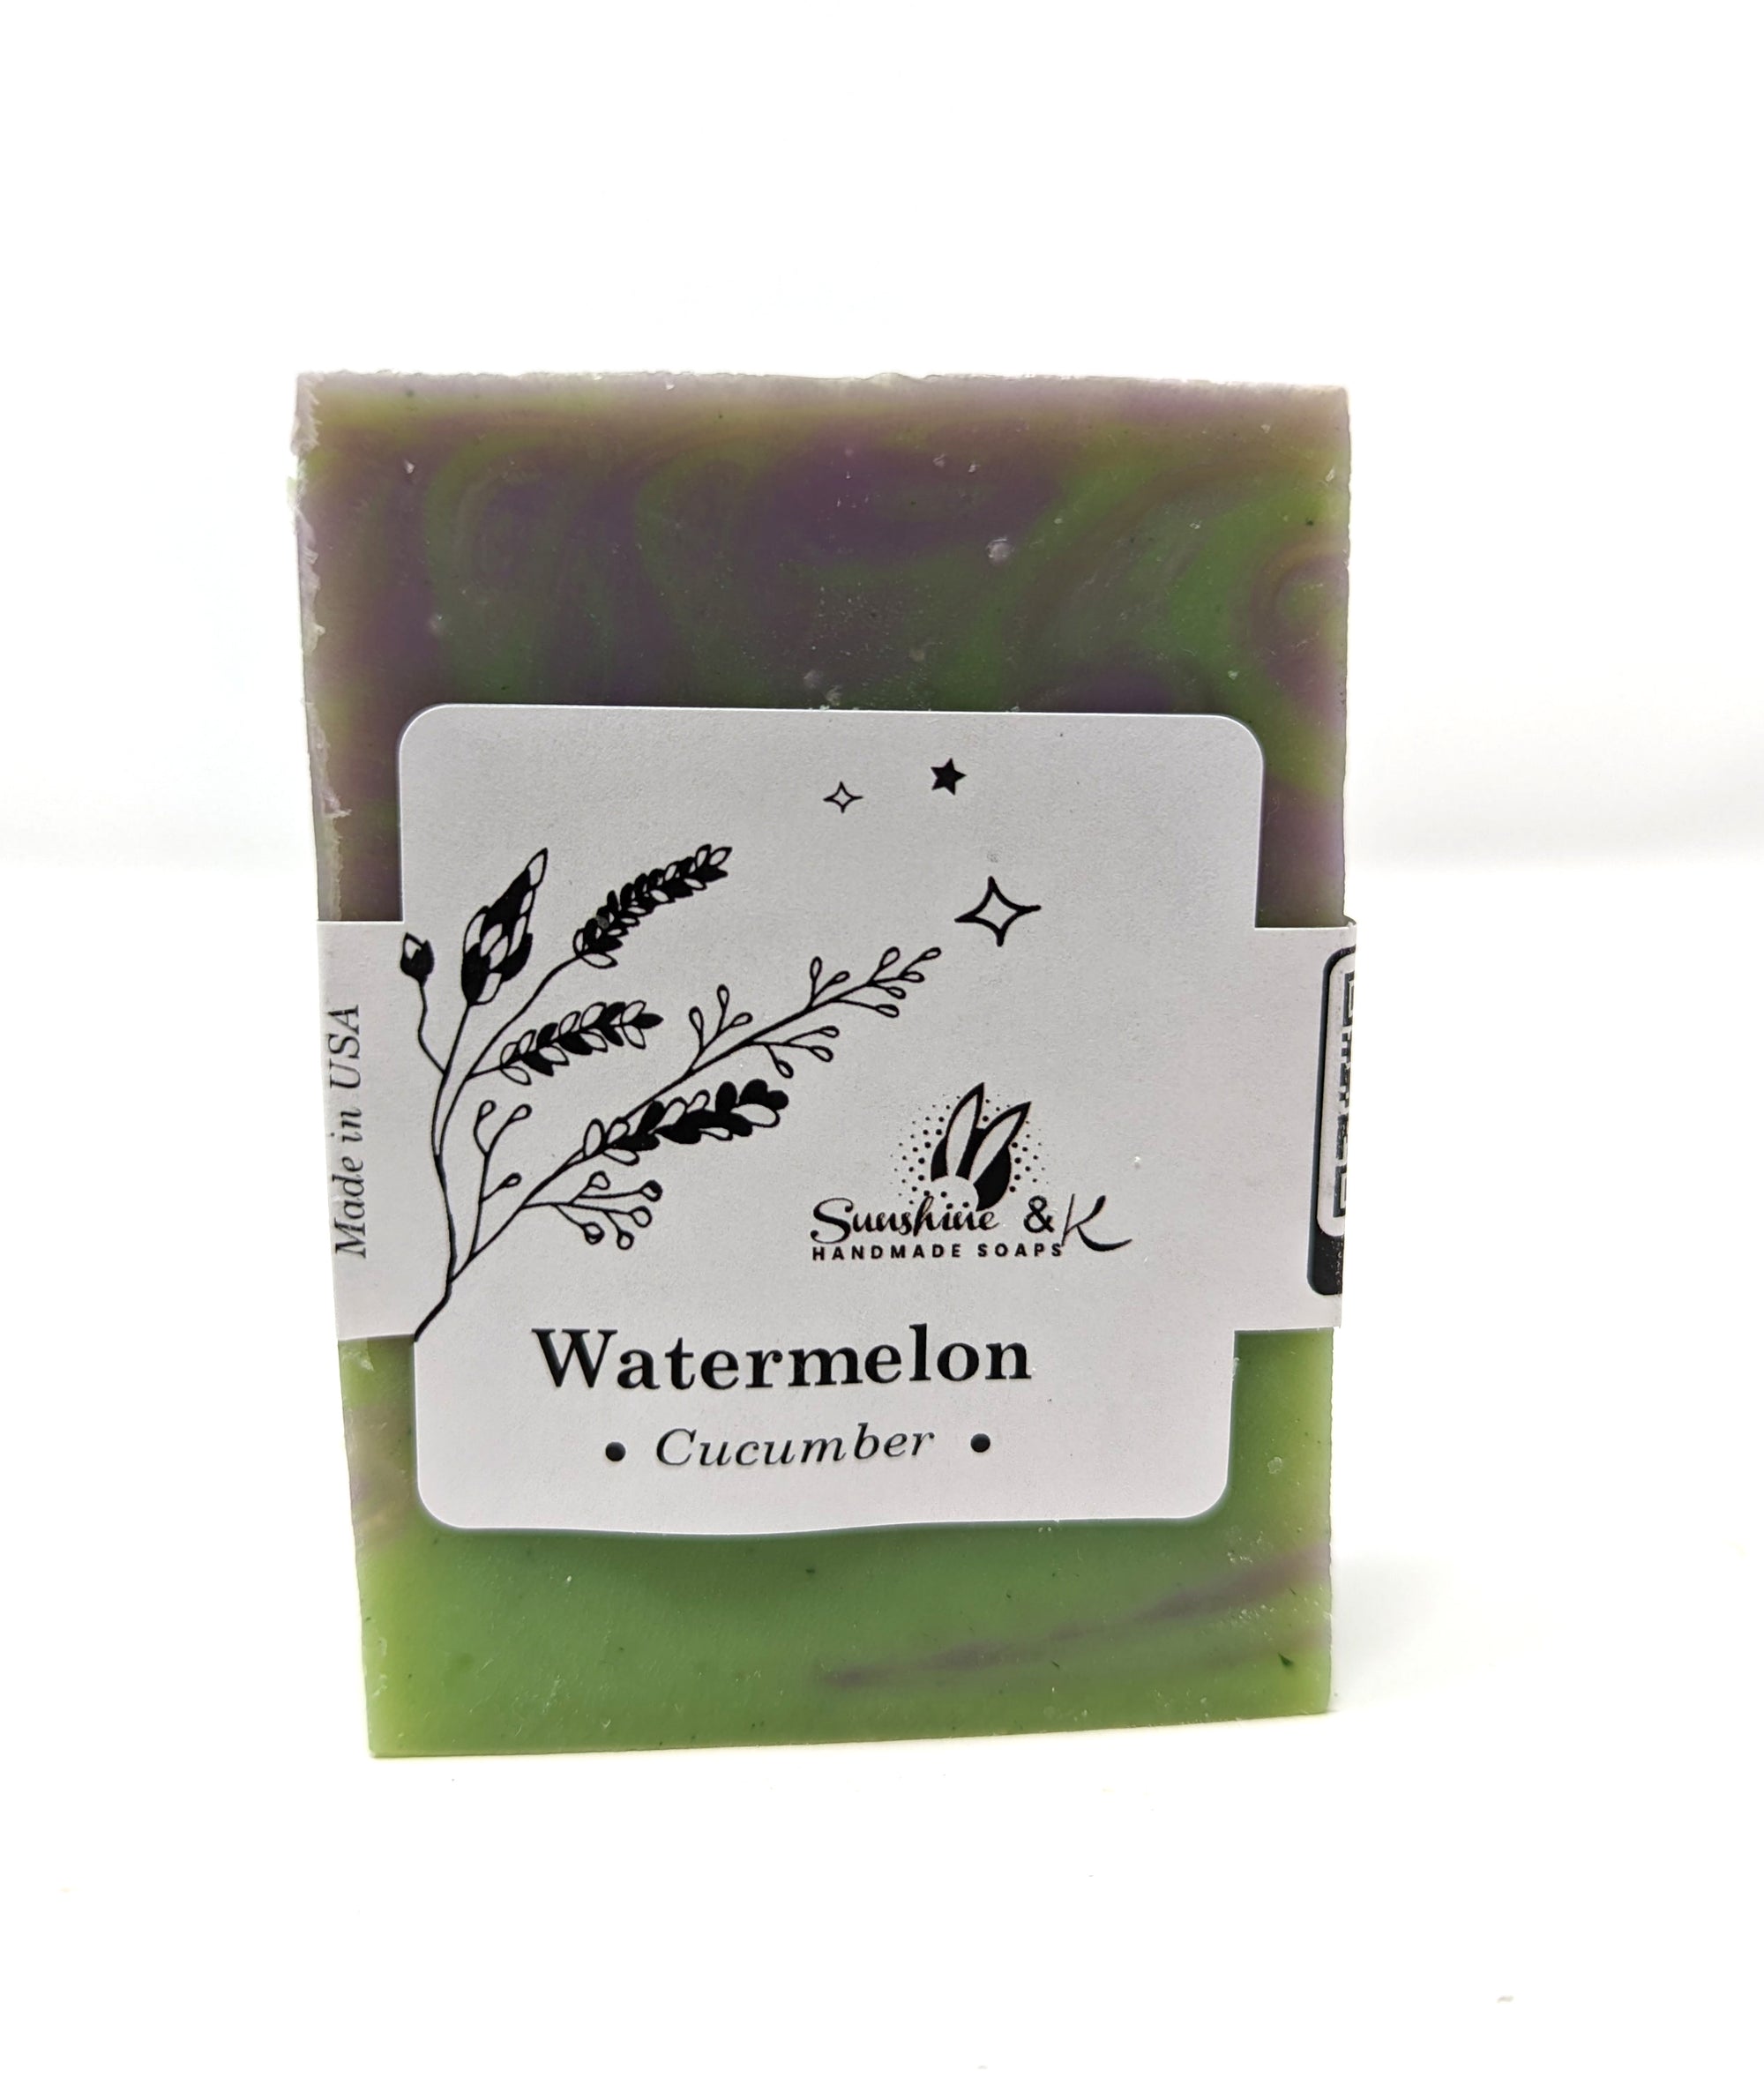 Watermelon Cucumber Bar Soap - Body & Face Bar Soap, Handmade Bath Soap, Moisturizing Bar Soap With Beeswax, Rice Bran Oil, & Natural Base Oils, Natural Soap Bars, 5 oz - clearance